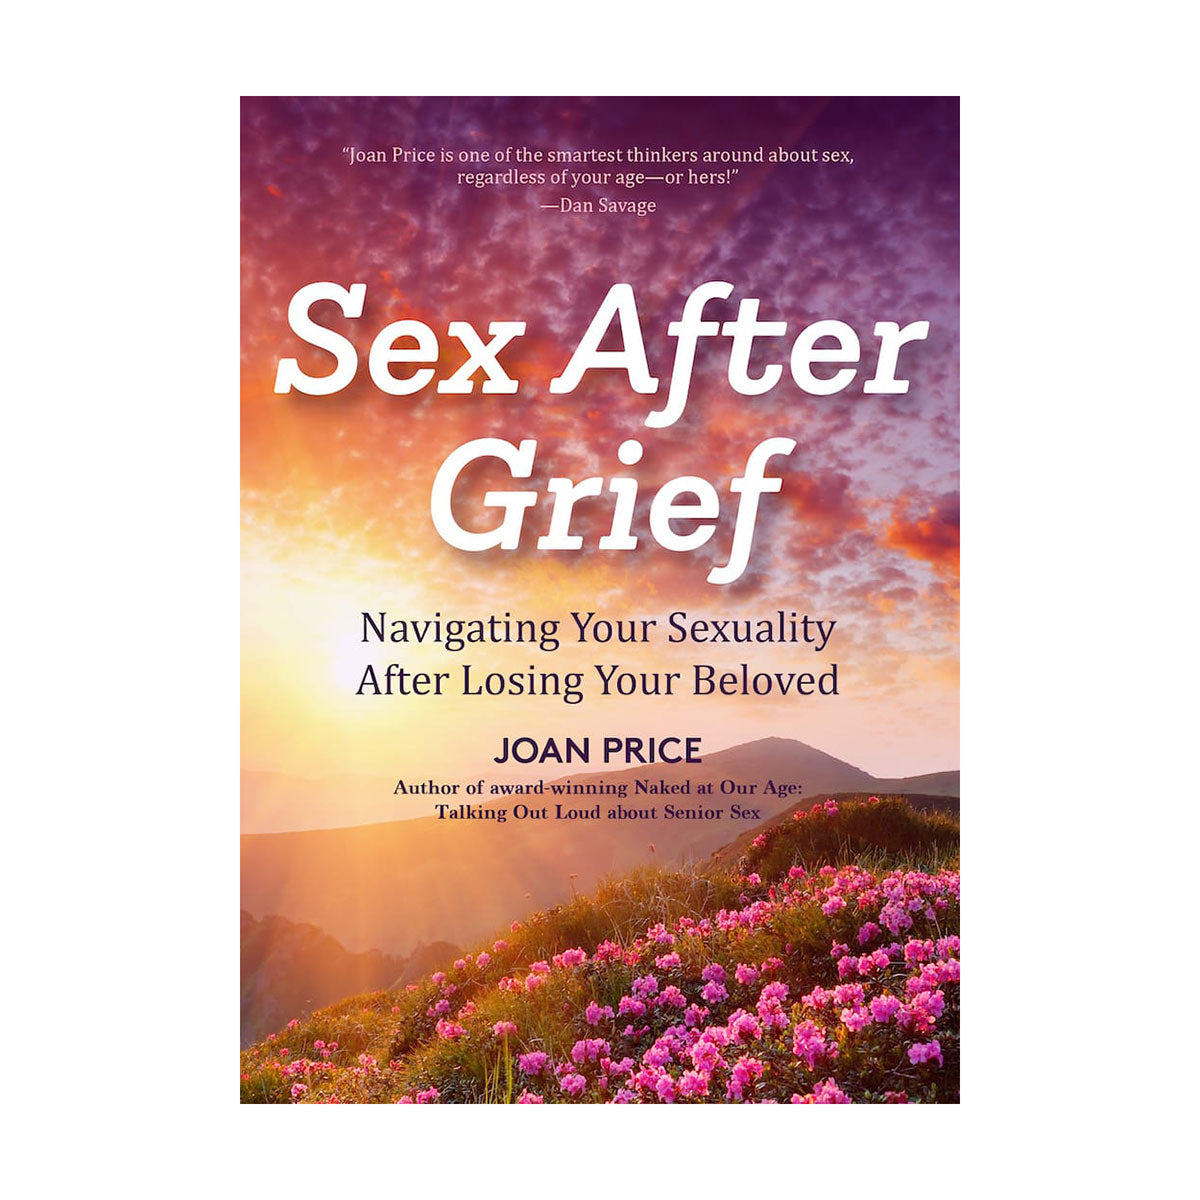 Sex After Grief Delicto image